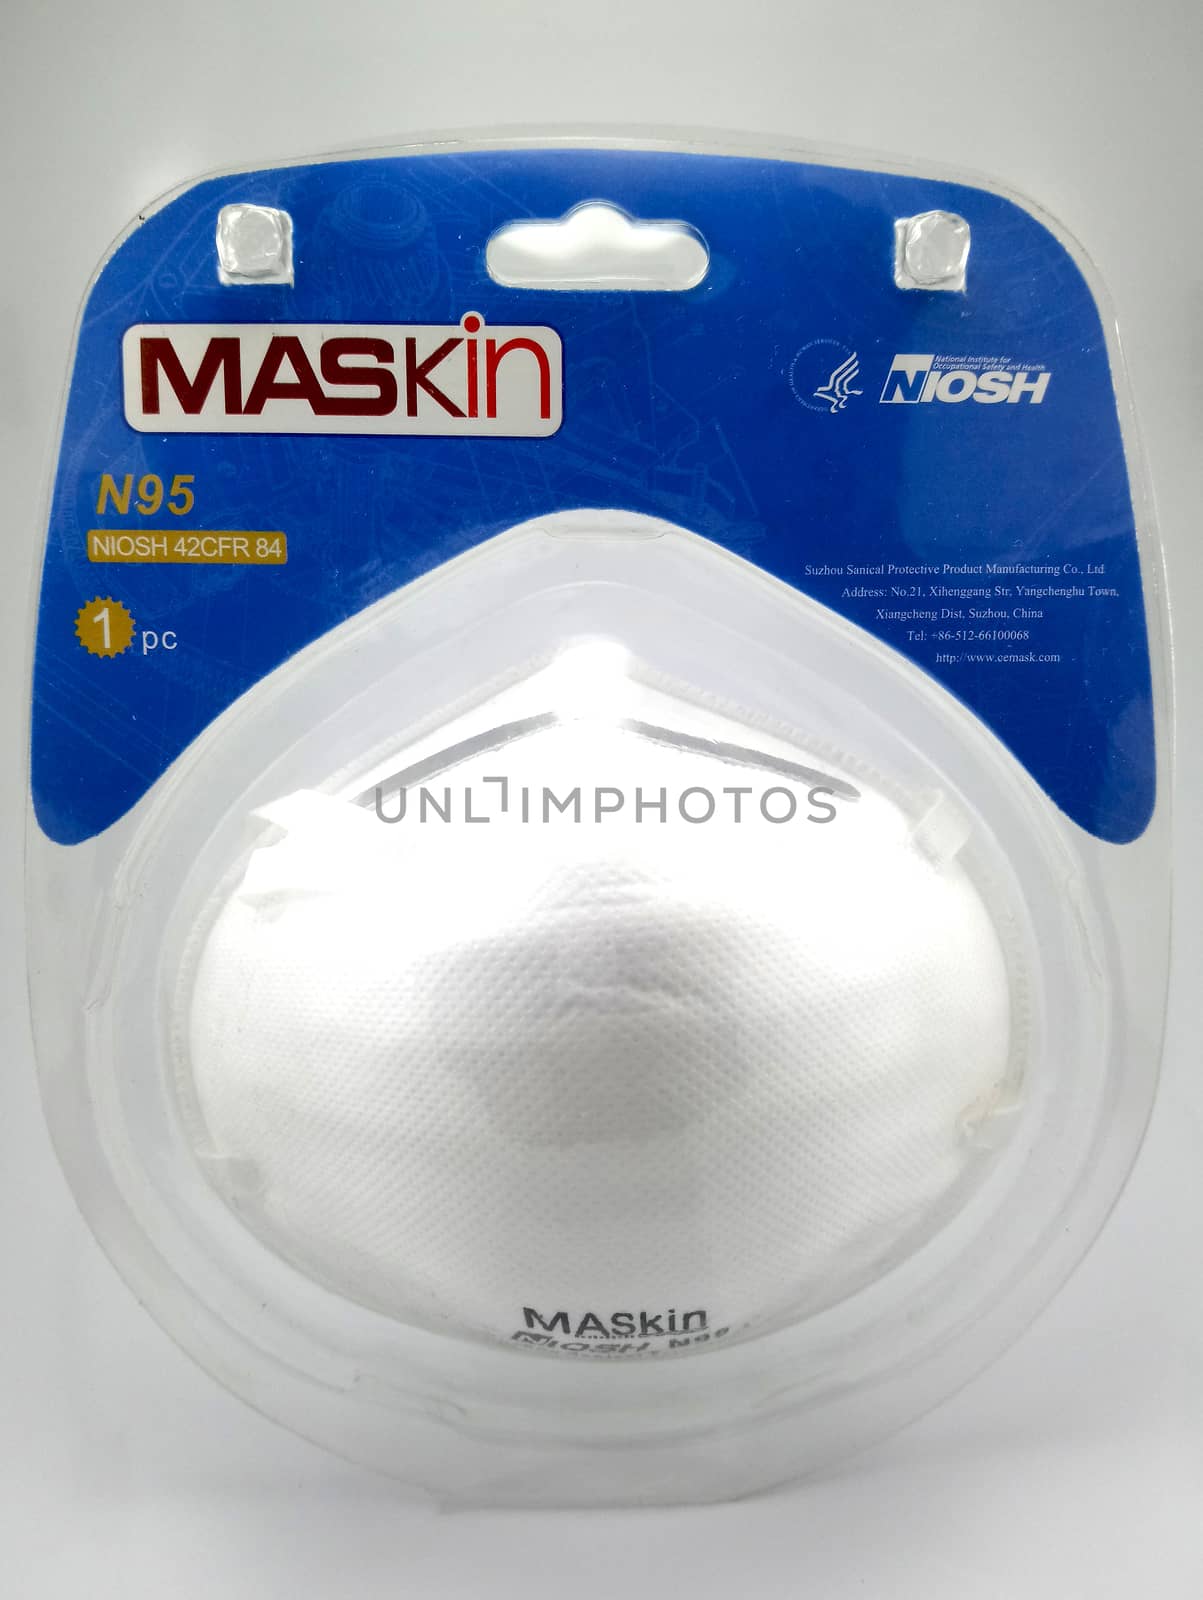 MANILA, PH - JUNE 23 - Maskin N95 mask on June 23, 2020 in Manila, Philippines.